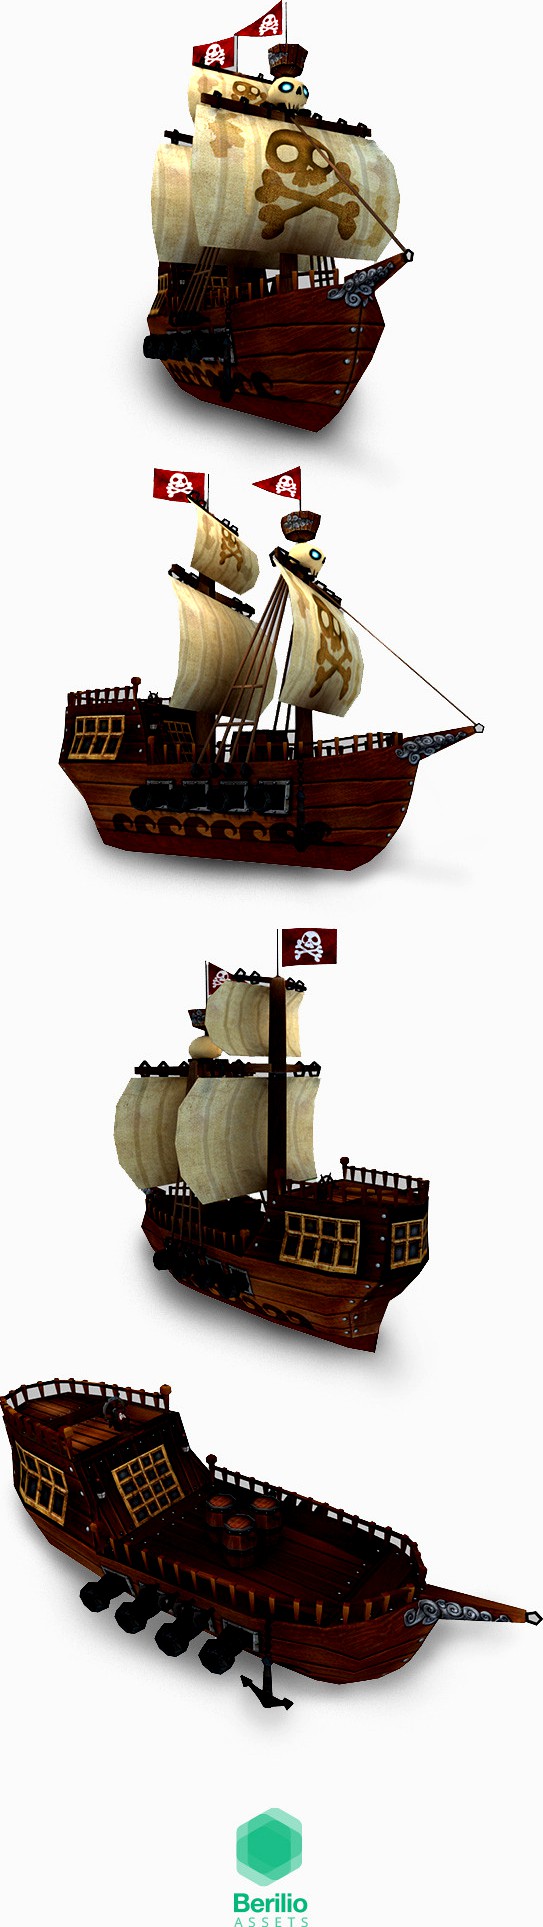 Low Poly Cartoonish Pirate Ship